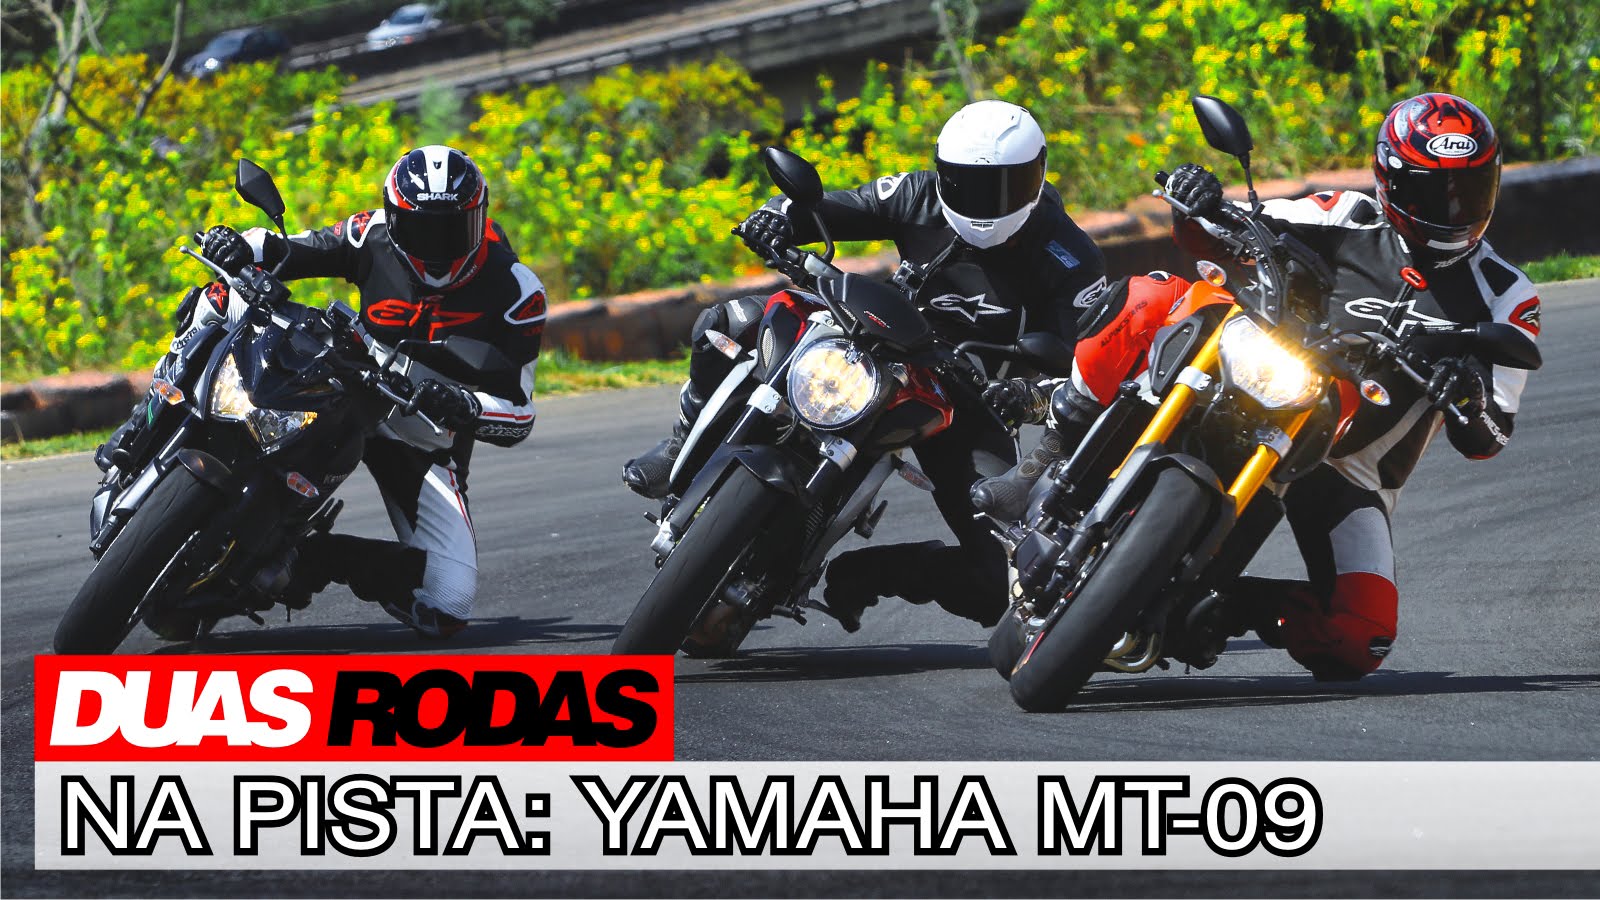 Apa Sudah Tepat Harga 250 Juta Rupiah Untuk Yamaha MT 09 Di